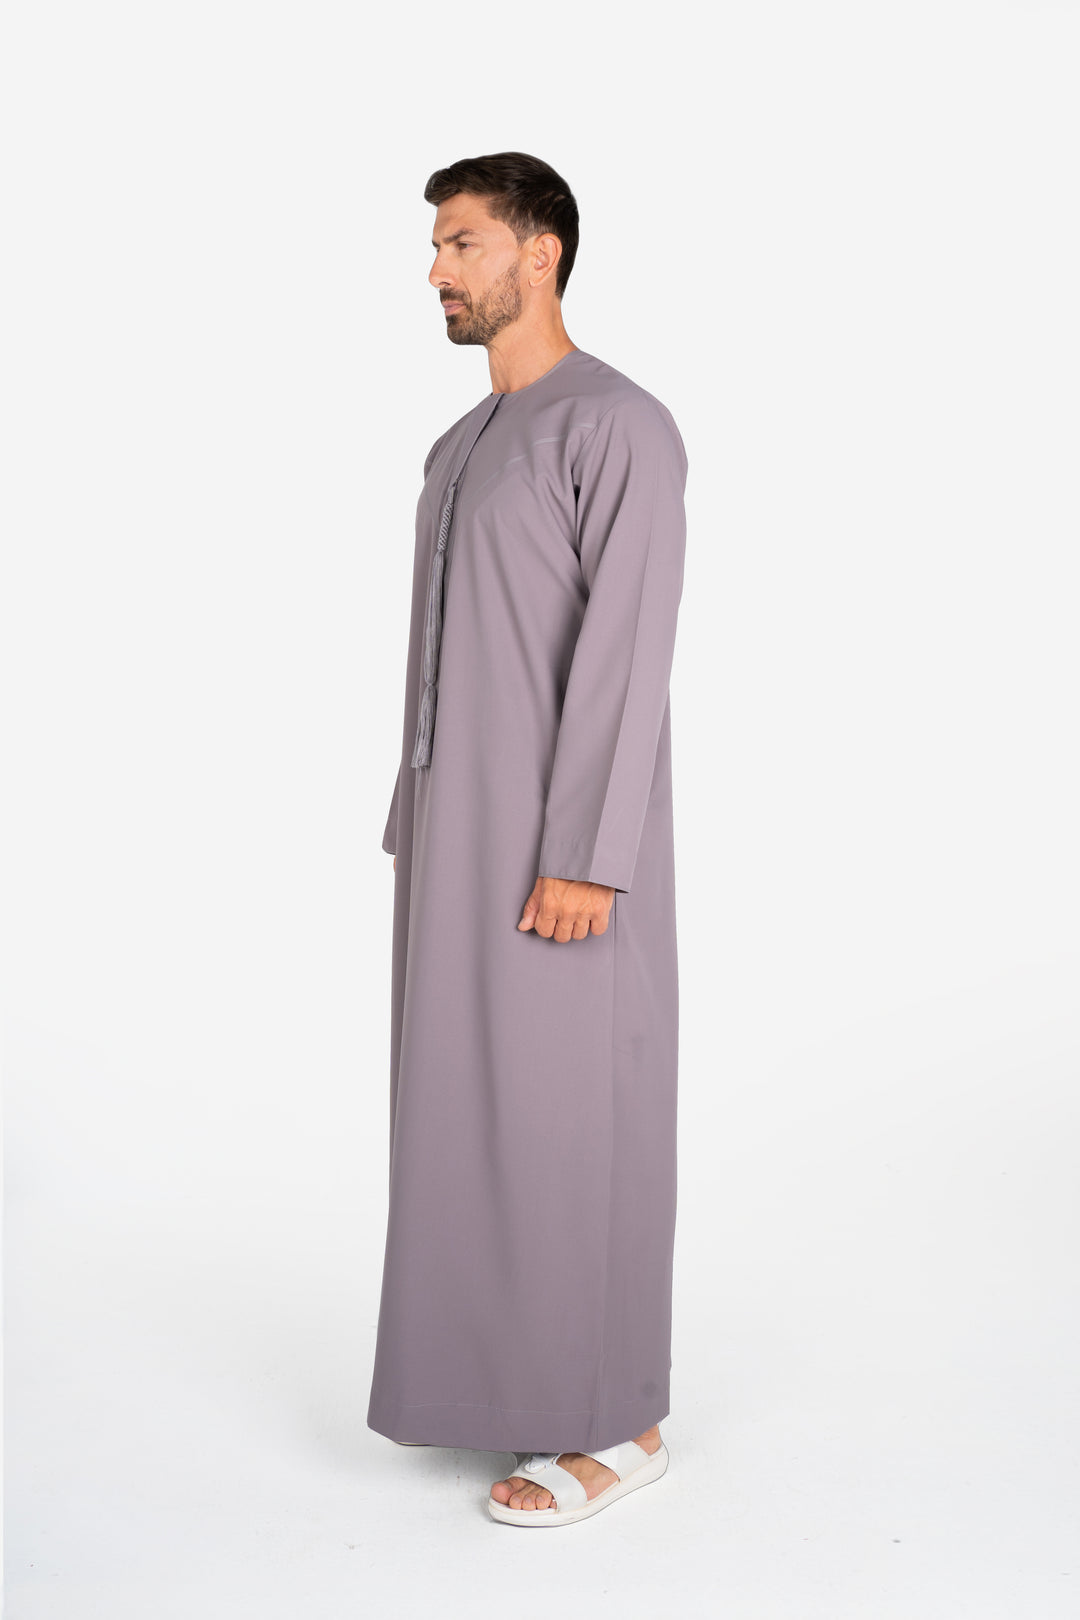 Basics Emirati Thobe- Slate Grey